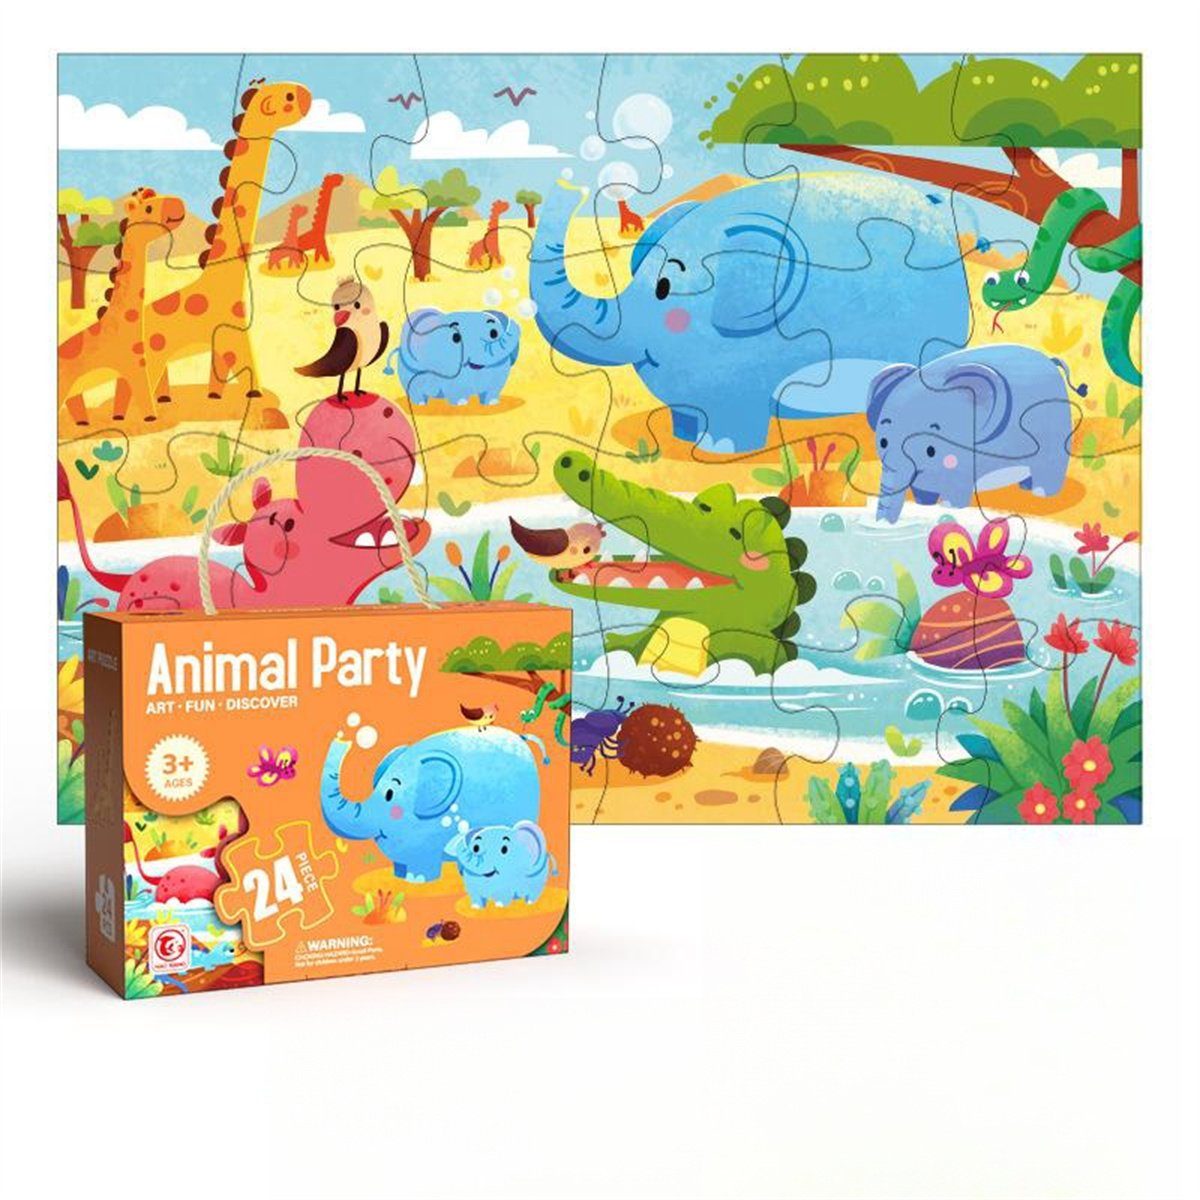 Puzzle Tier-Party-Muster-Puzzle, carefully selected Kinder, Spielzeug-Geschenk Puzzleteile für pädagogisches